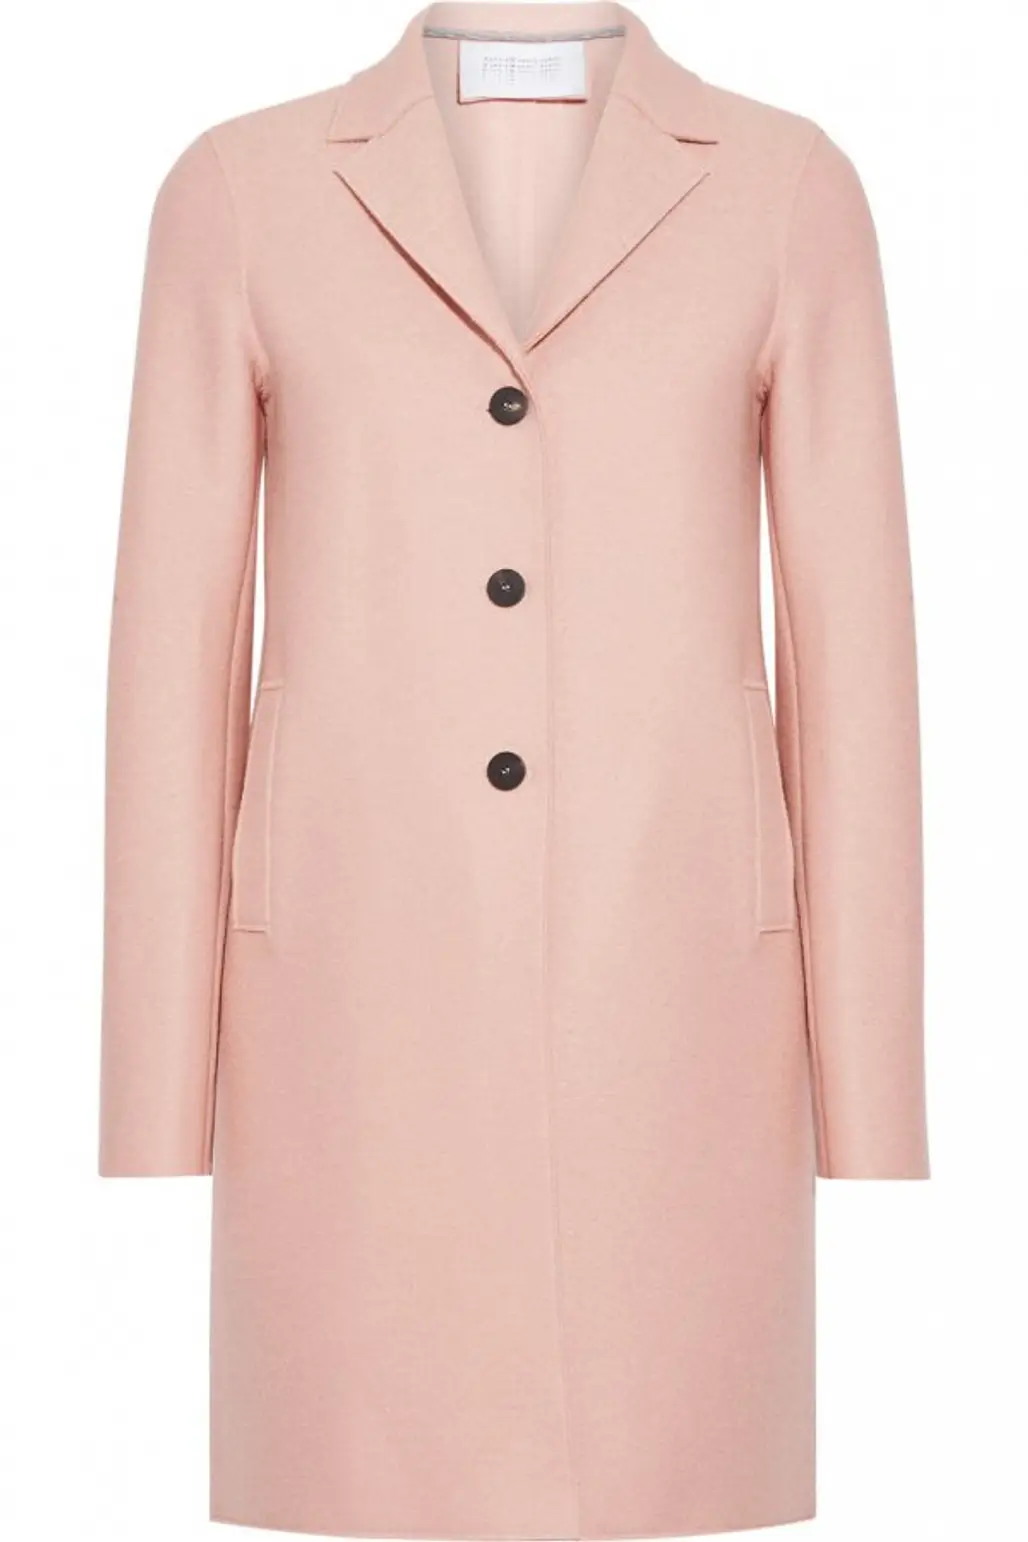 coat, pink, overcoat, day dress, peach,